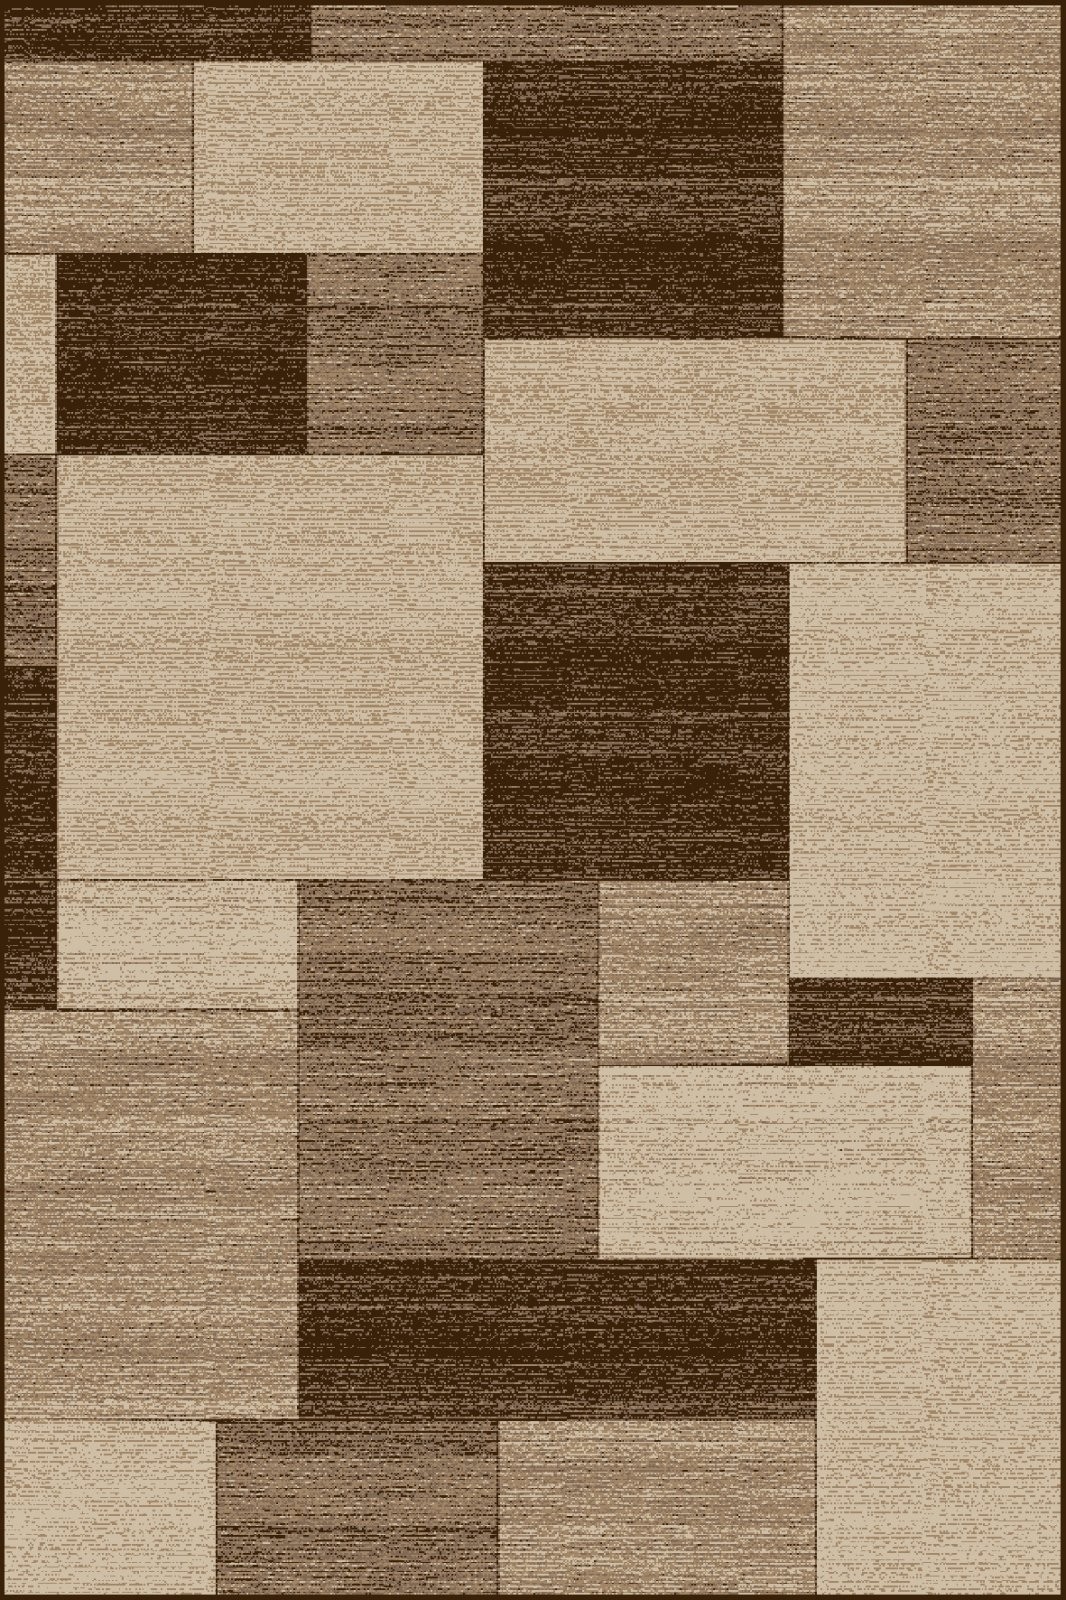 Covor Dreptunghiular, 100 x 200 cm, Bej / Maro, Daffi 13027